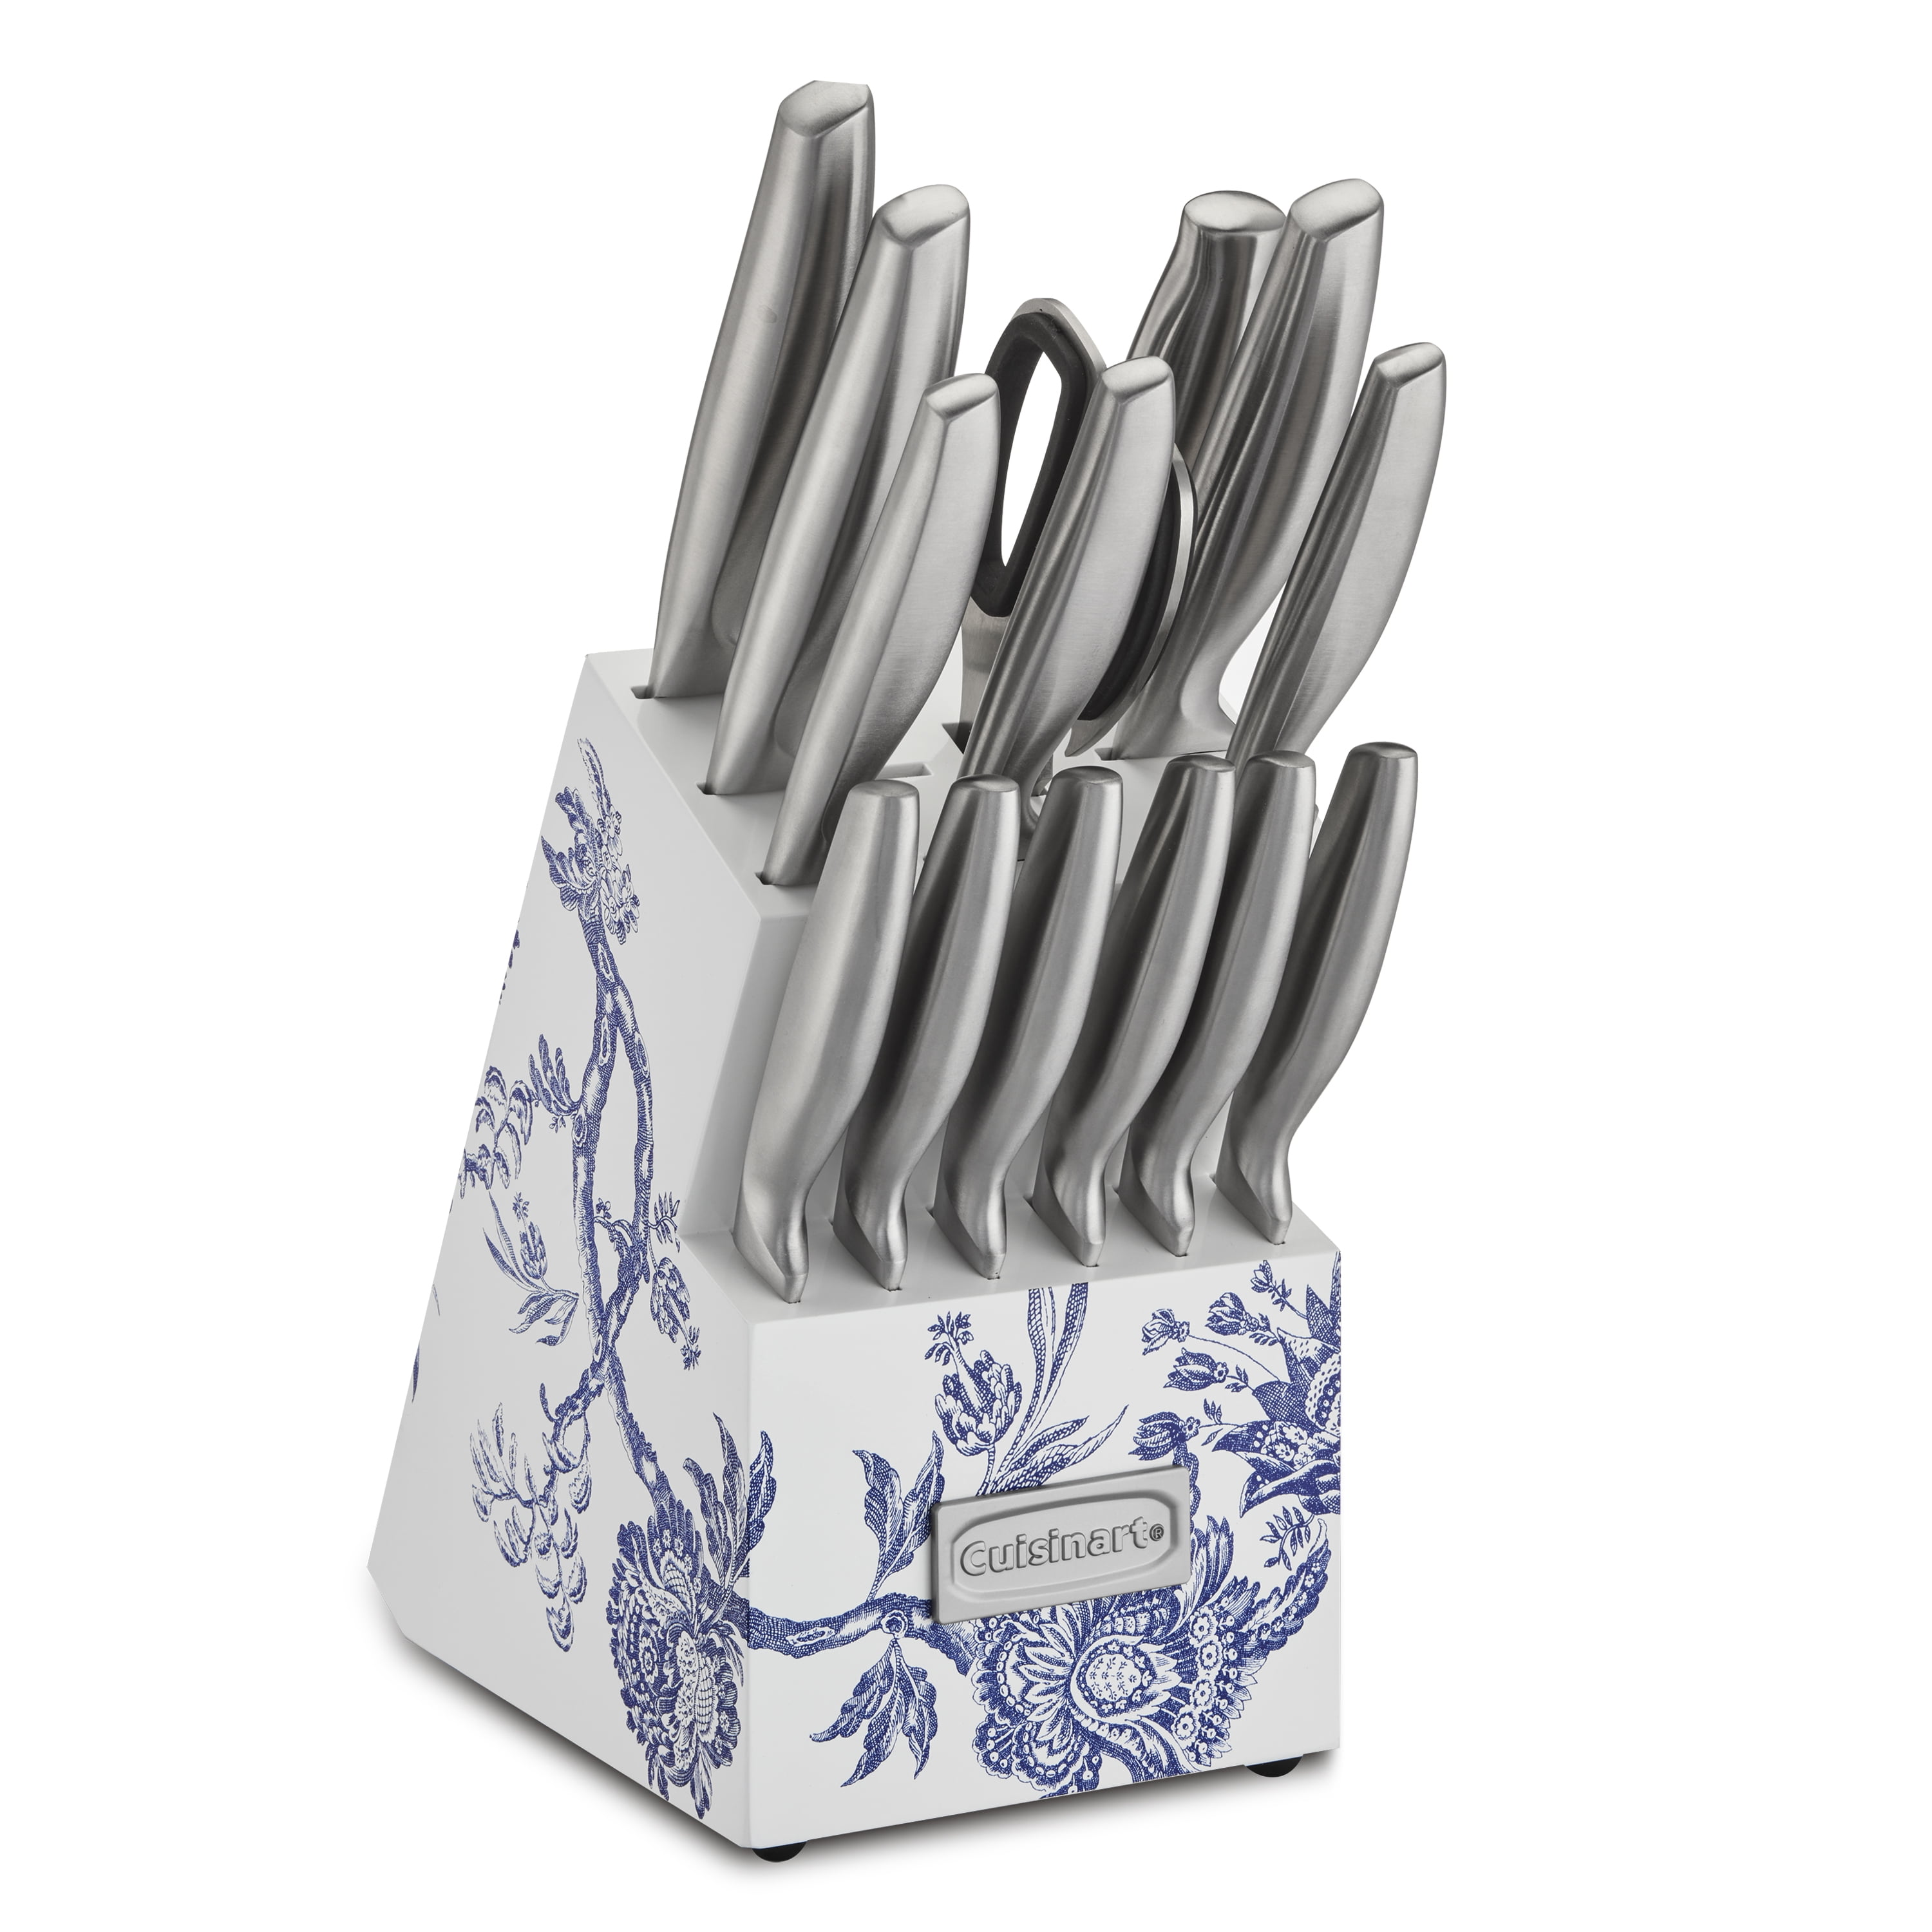 Cuisinart 5-piece German Stainless Steel Knife Set